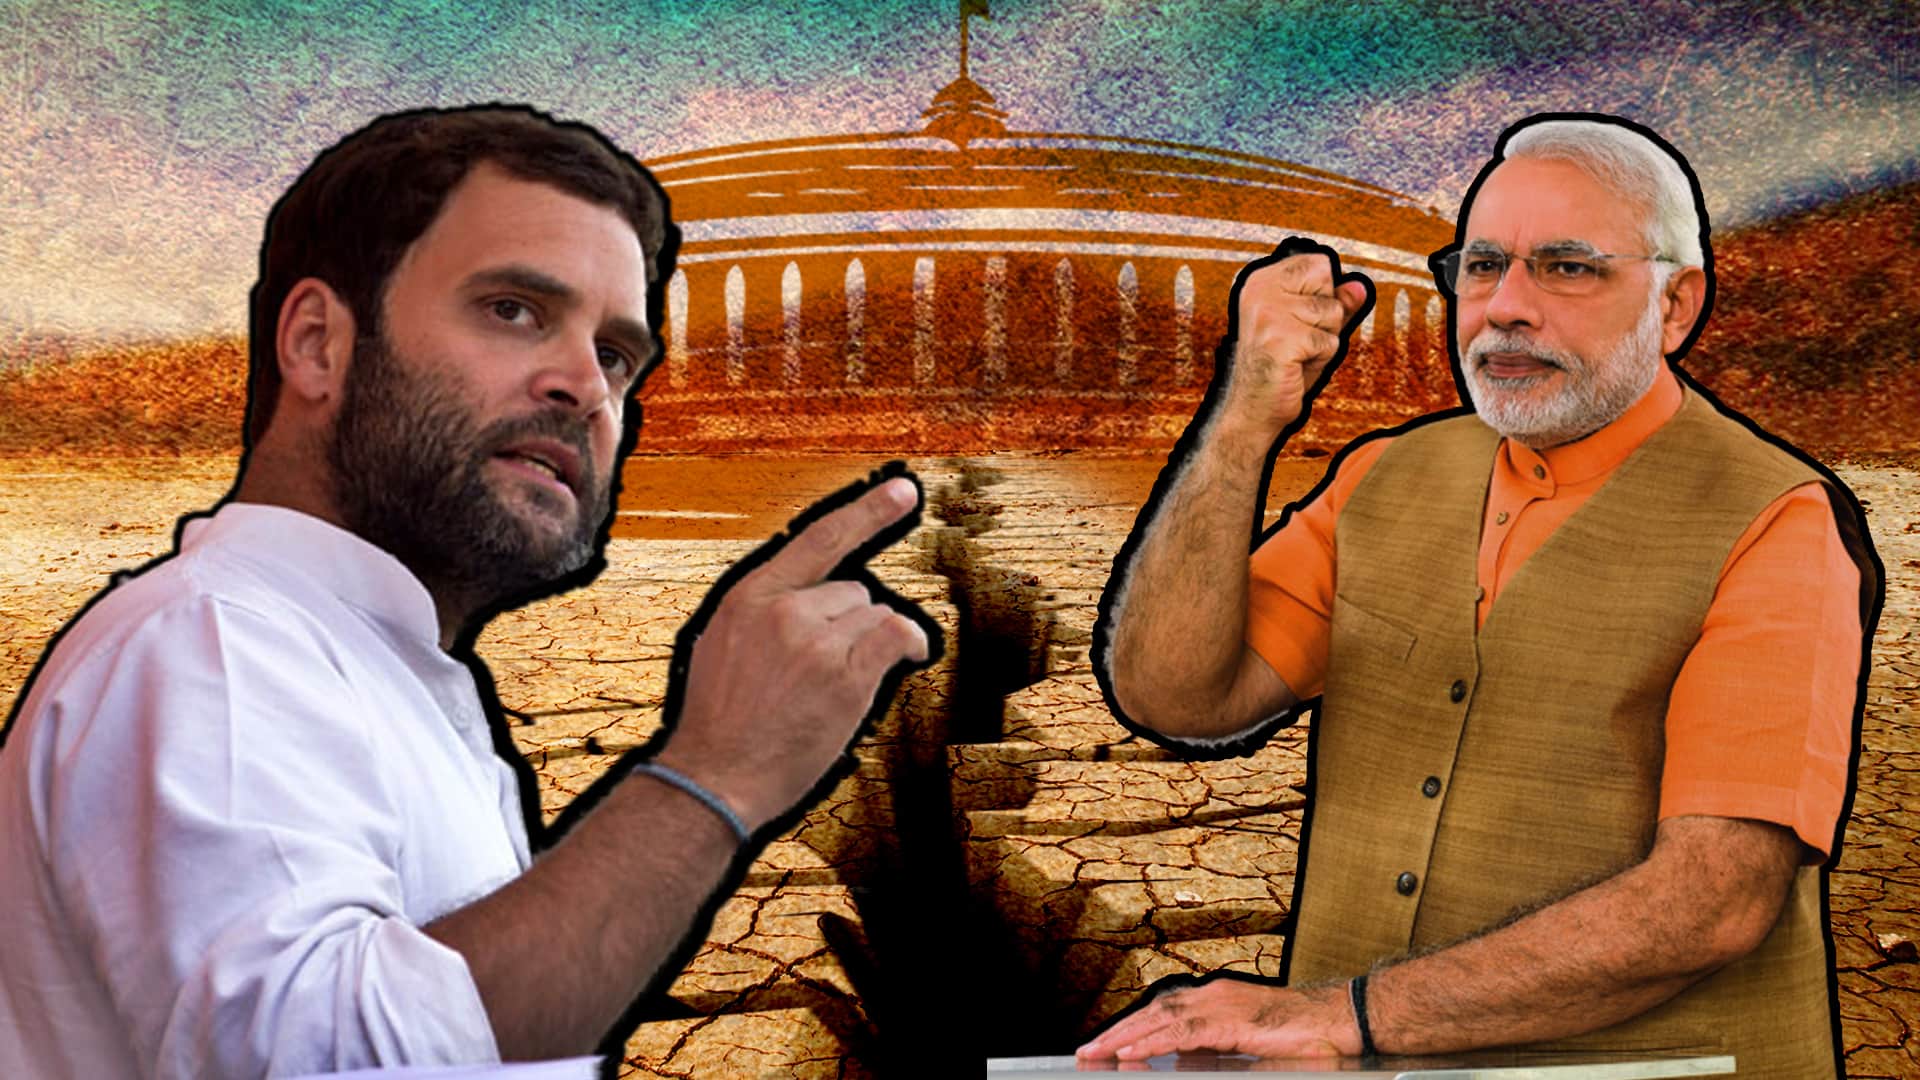 No-confidence debate: PM Modi berates 'childish' Rahul Gandhi for remarks on Doklam, Rafale deal, surgical strikes